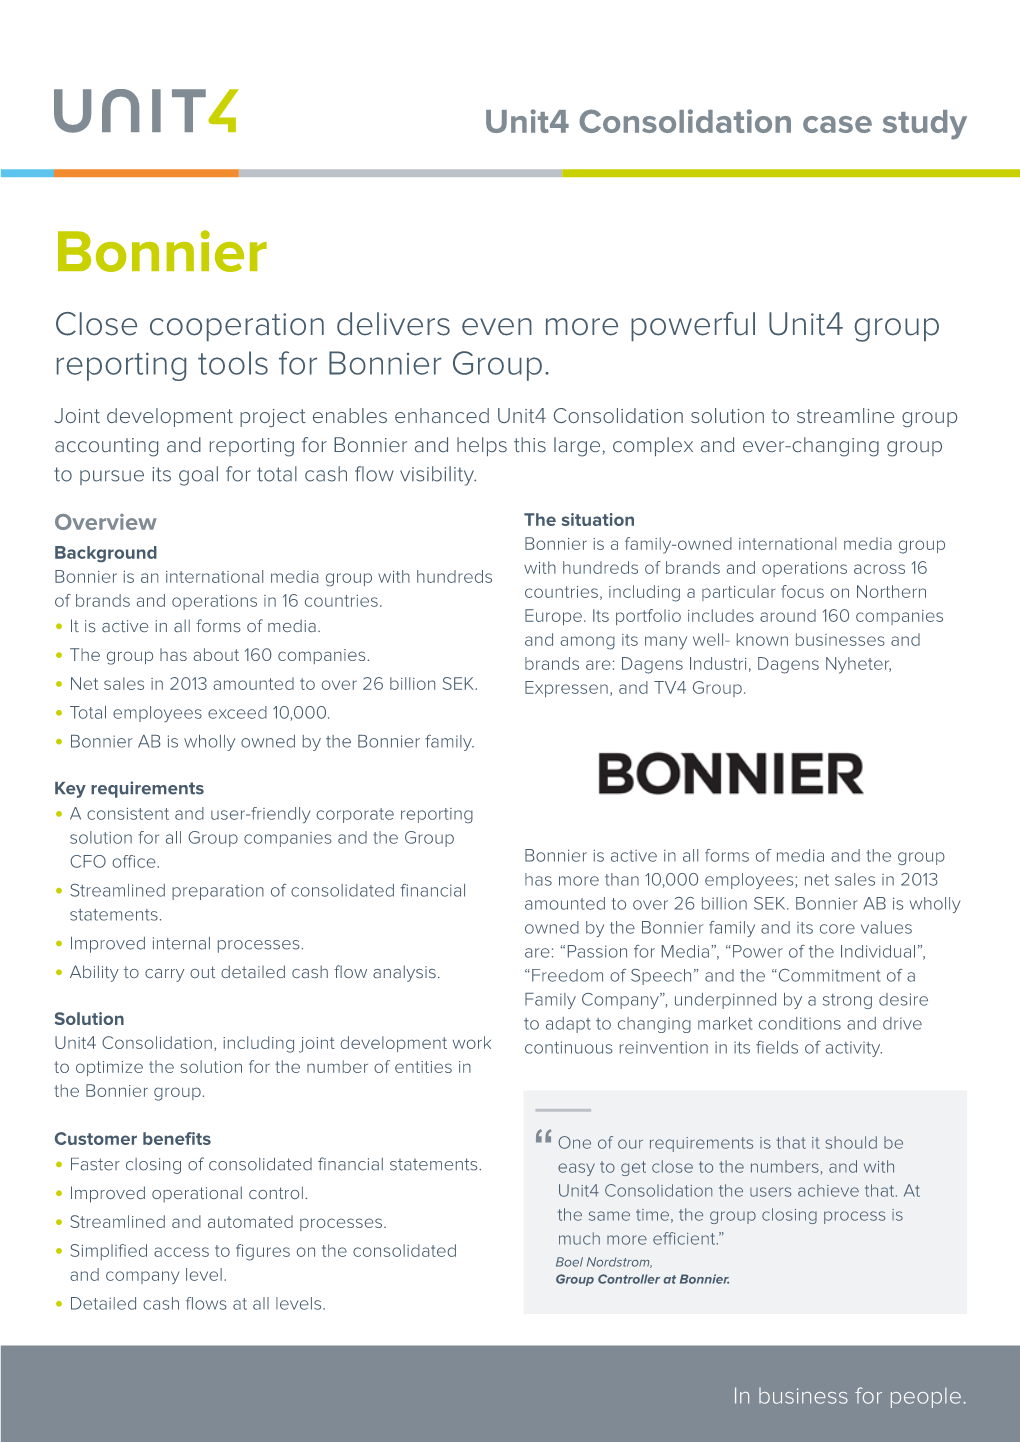 Bonnier – Close Cooperation Delivers Even More Powerful UNIT4 Group